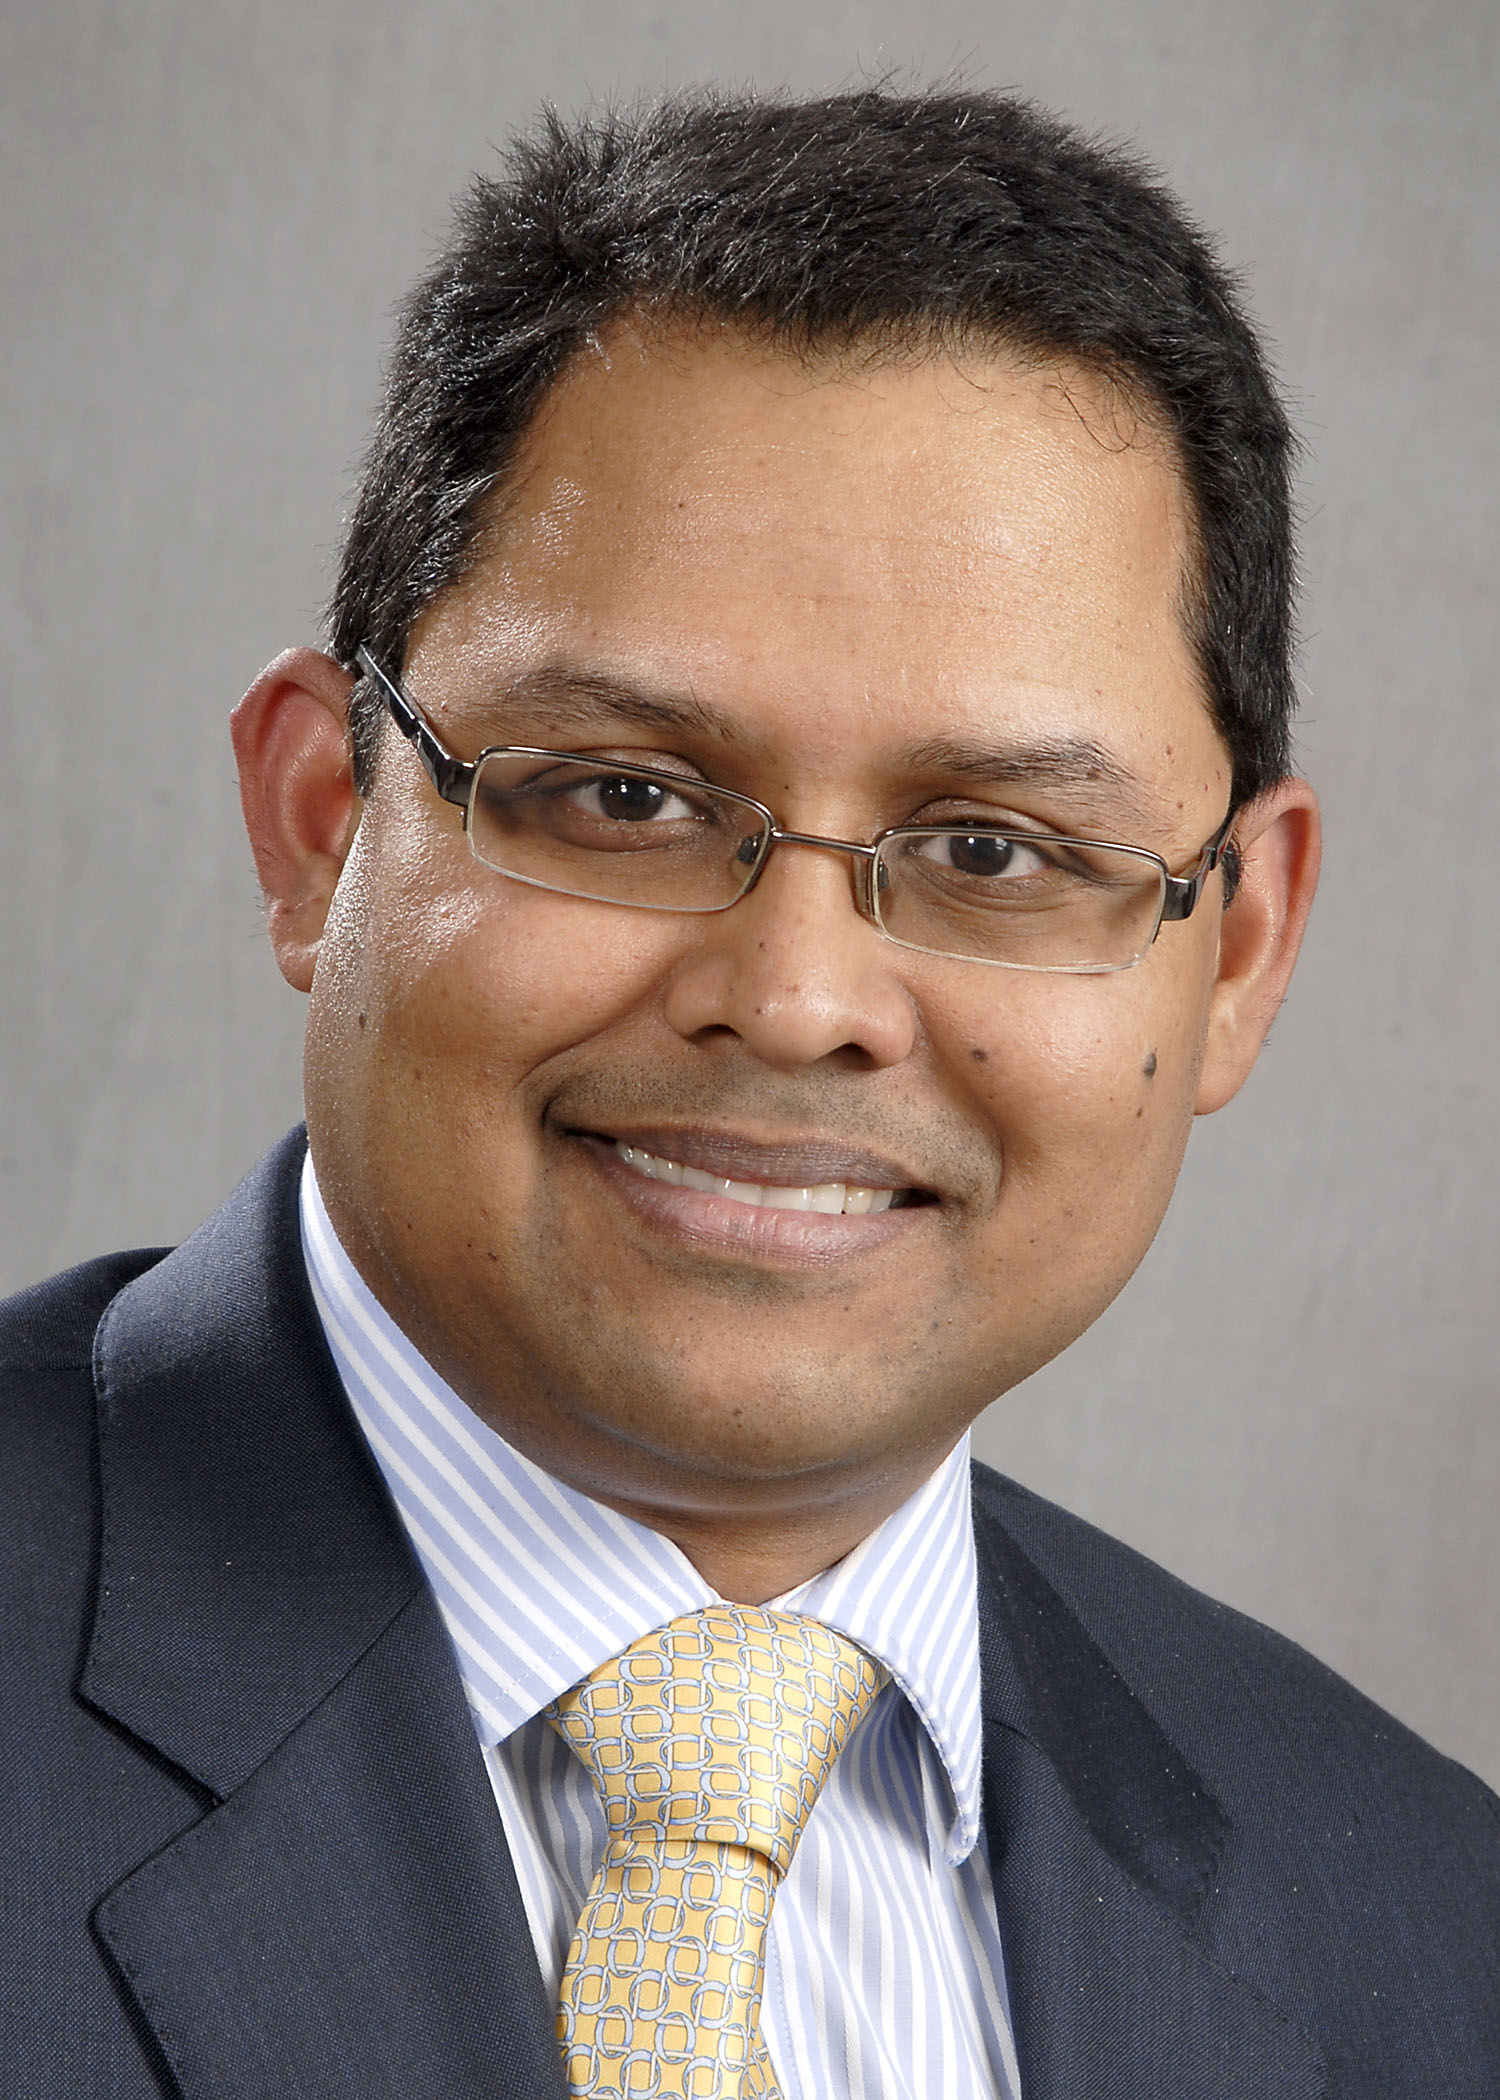 Mr Bhaskar Somani, consultant urological surgeon